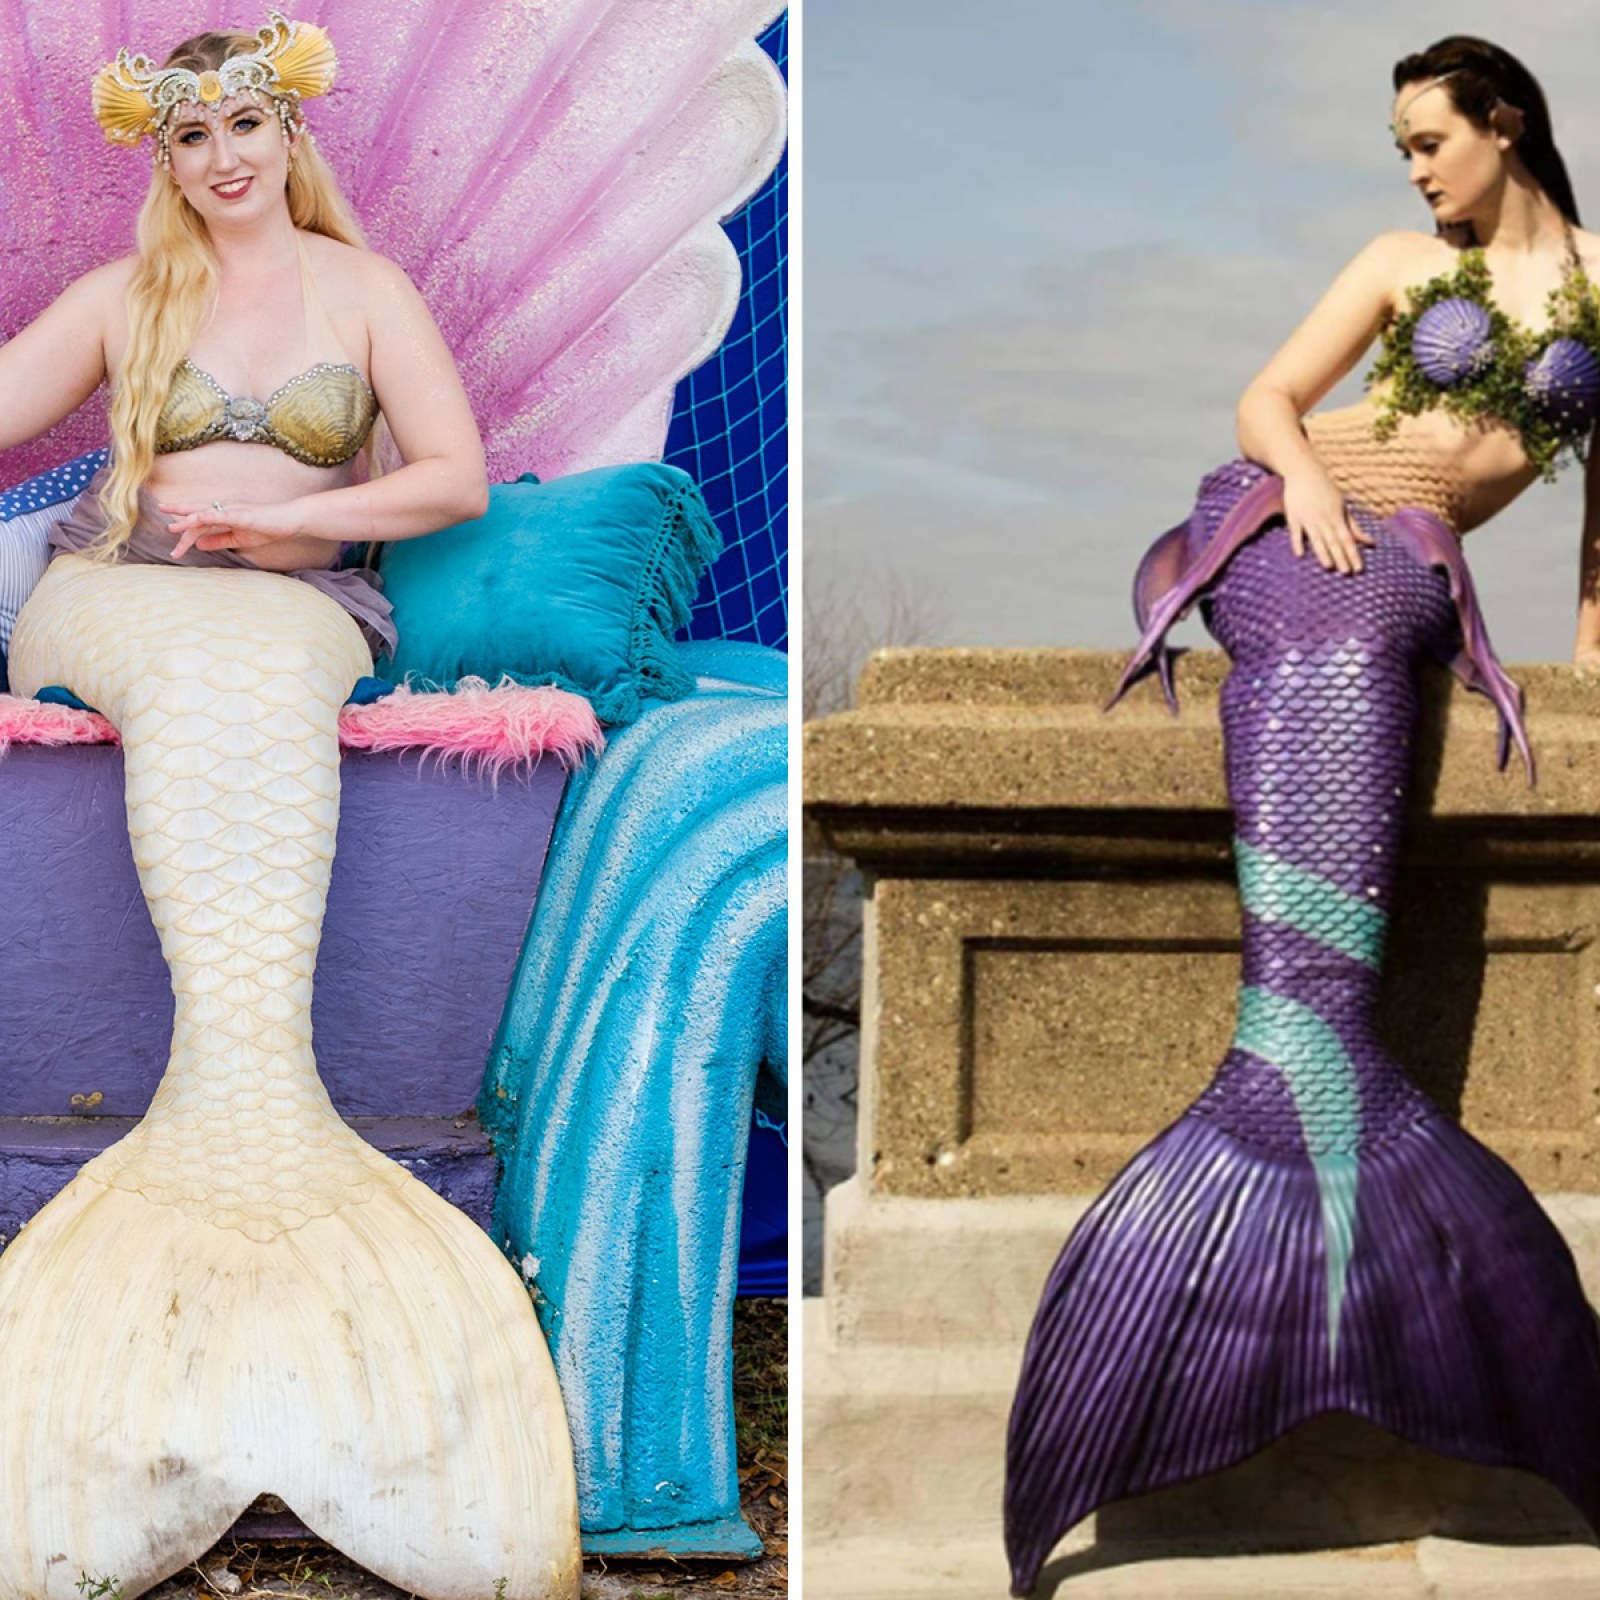 how do mermaids look in real life